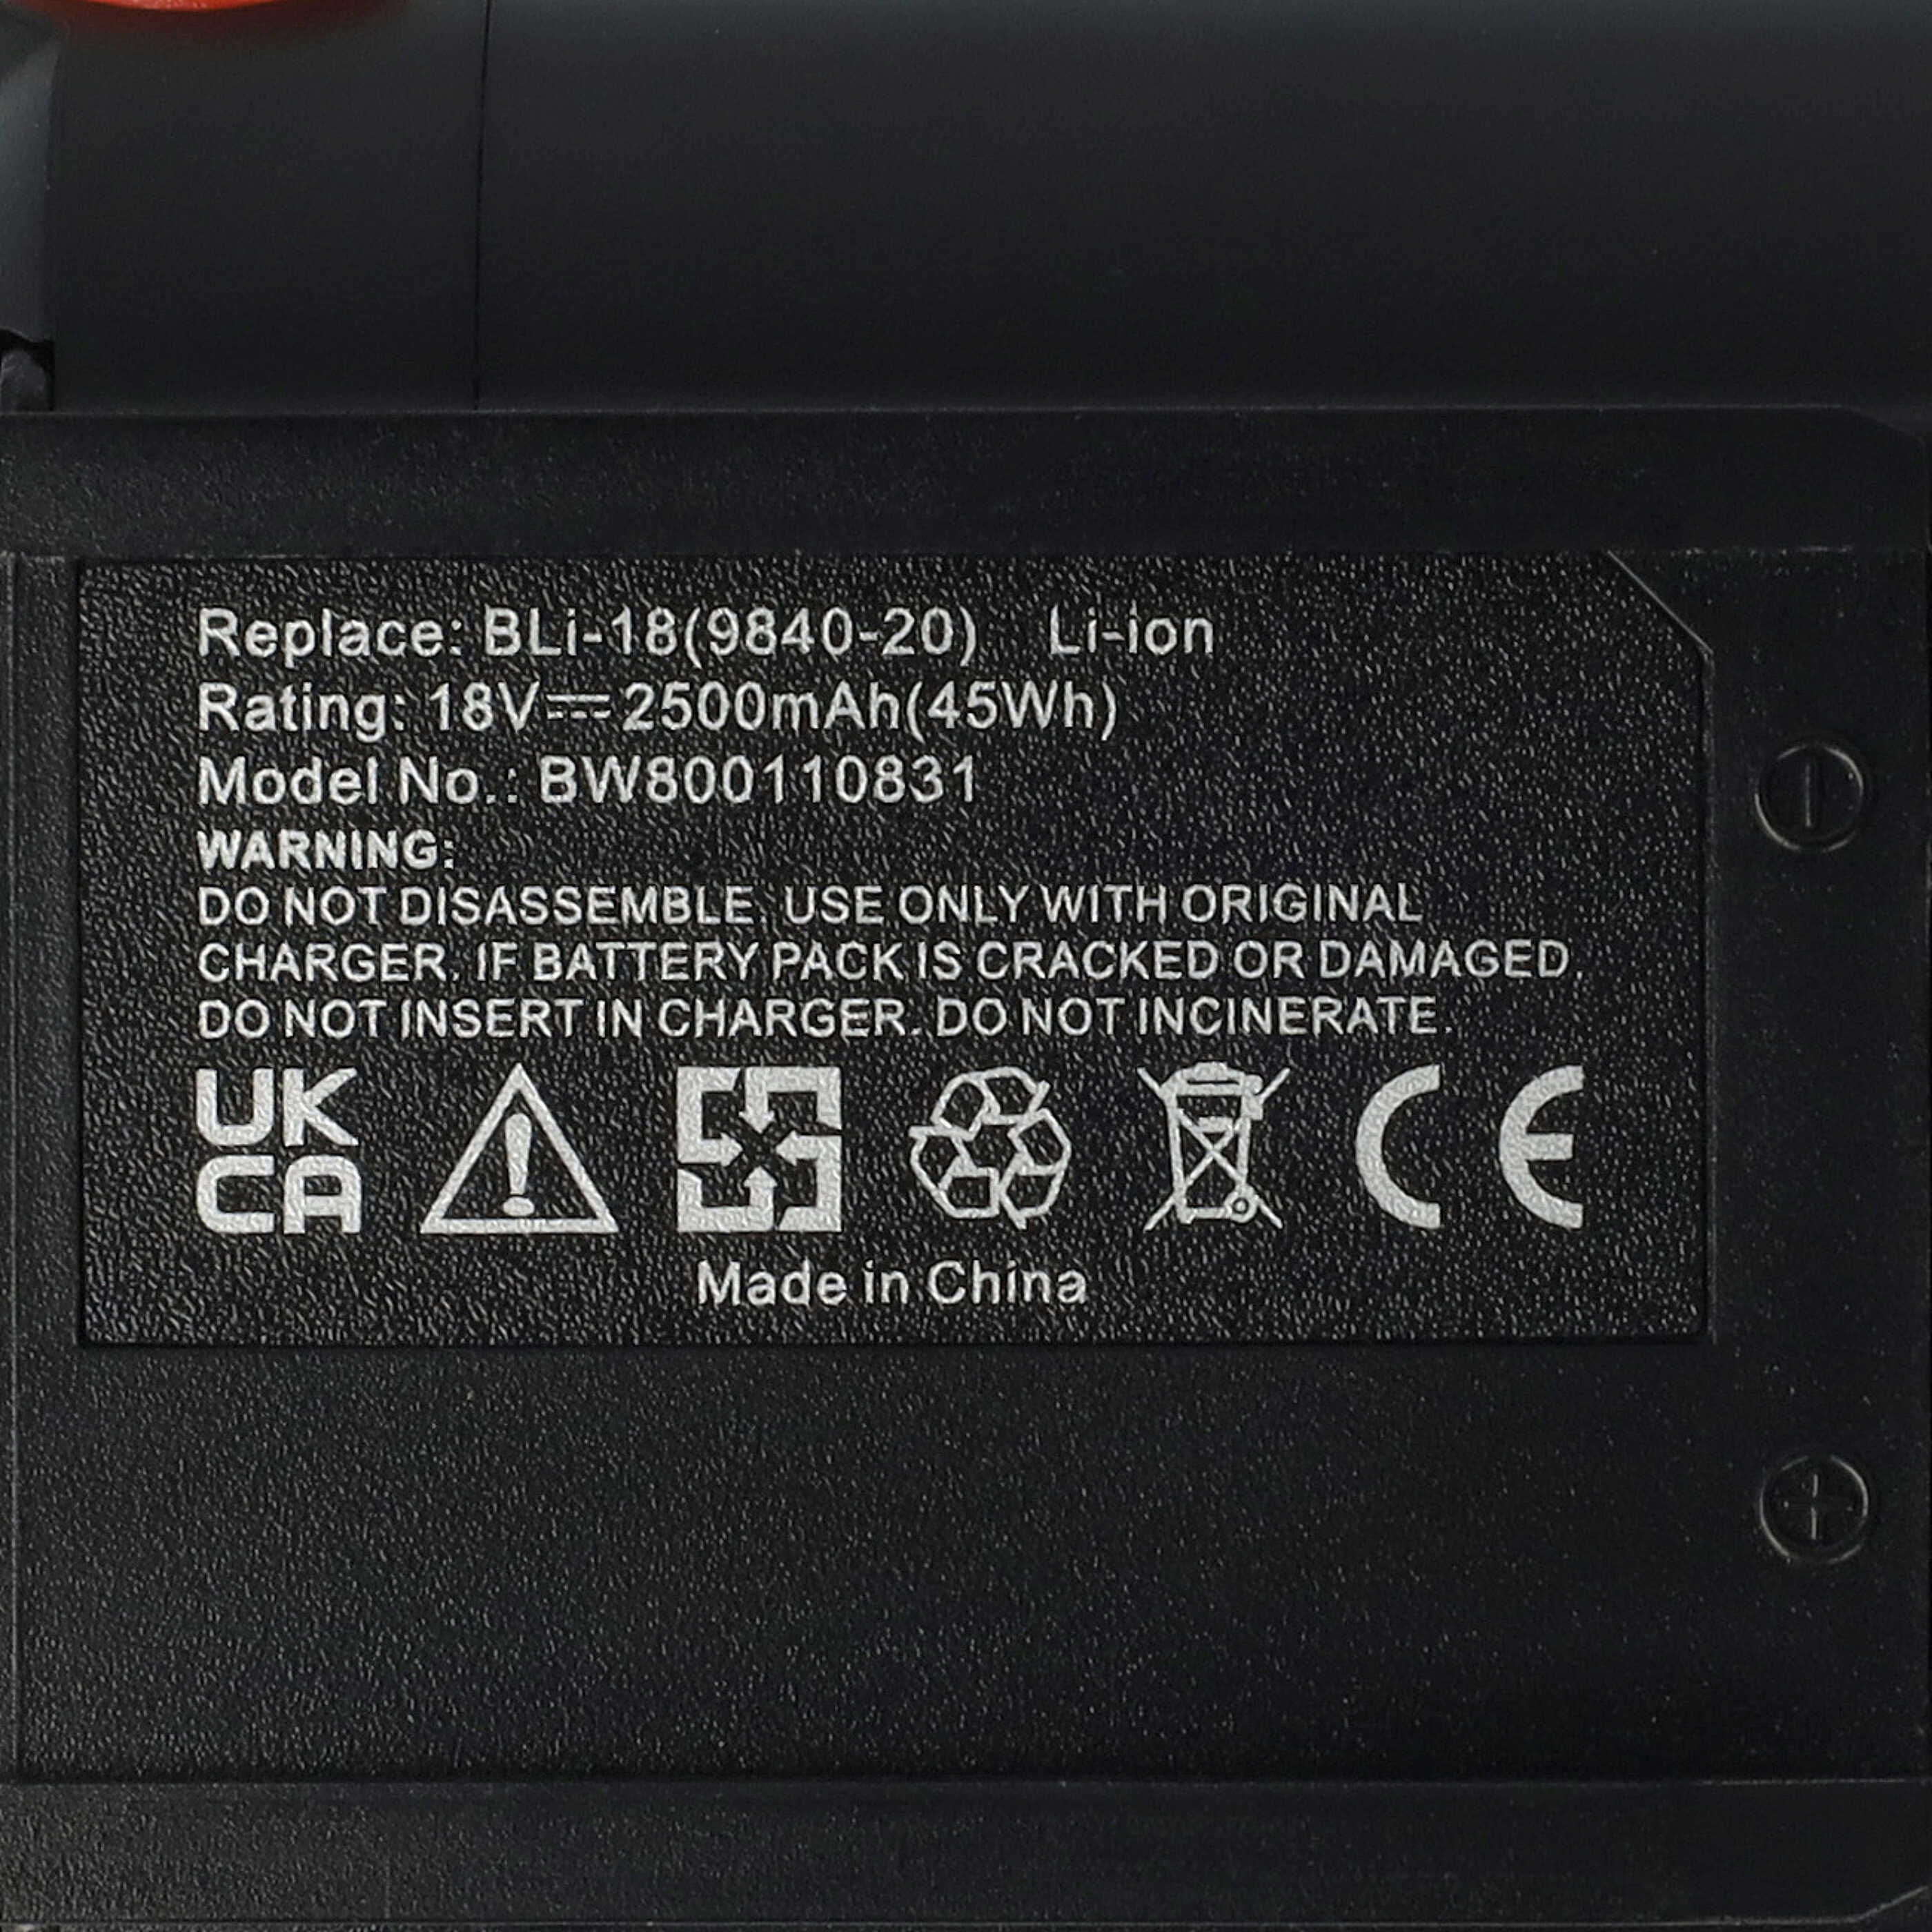 Lawnmower Battery Replacement for Gardena BLi-18, 9839-20, 9840-20 - 2500mAh 18V Li-Ion, black